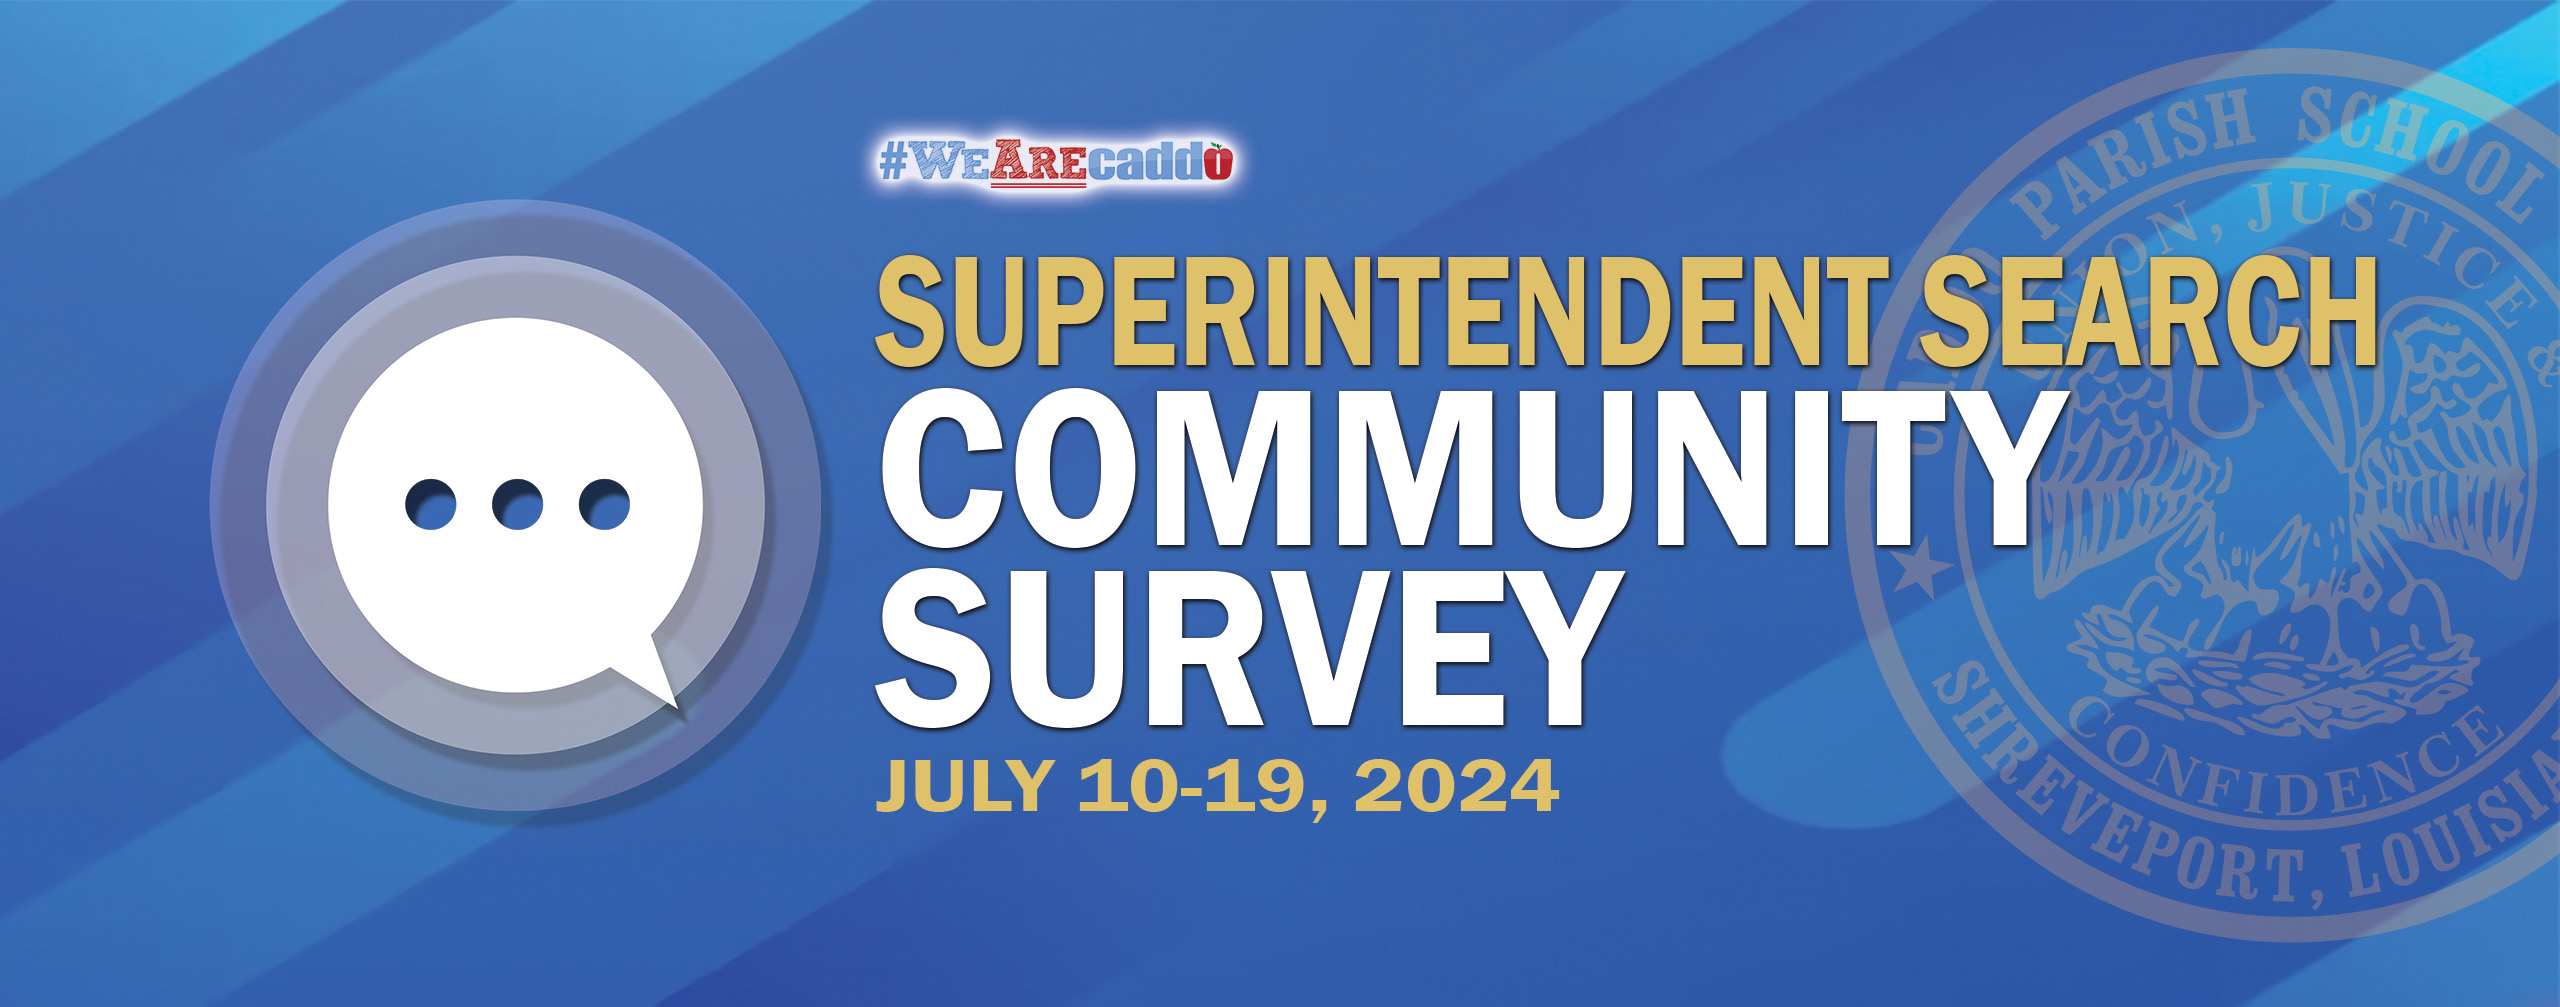 Superintendent Search Community Survey